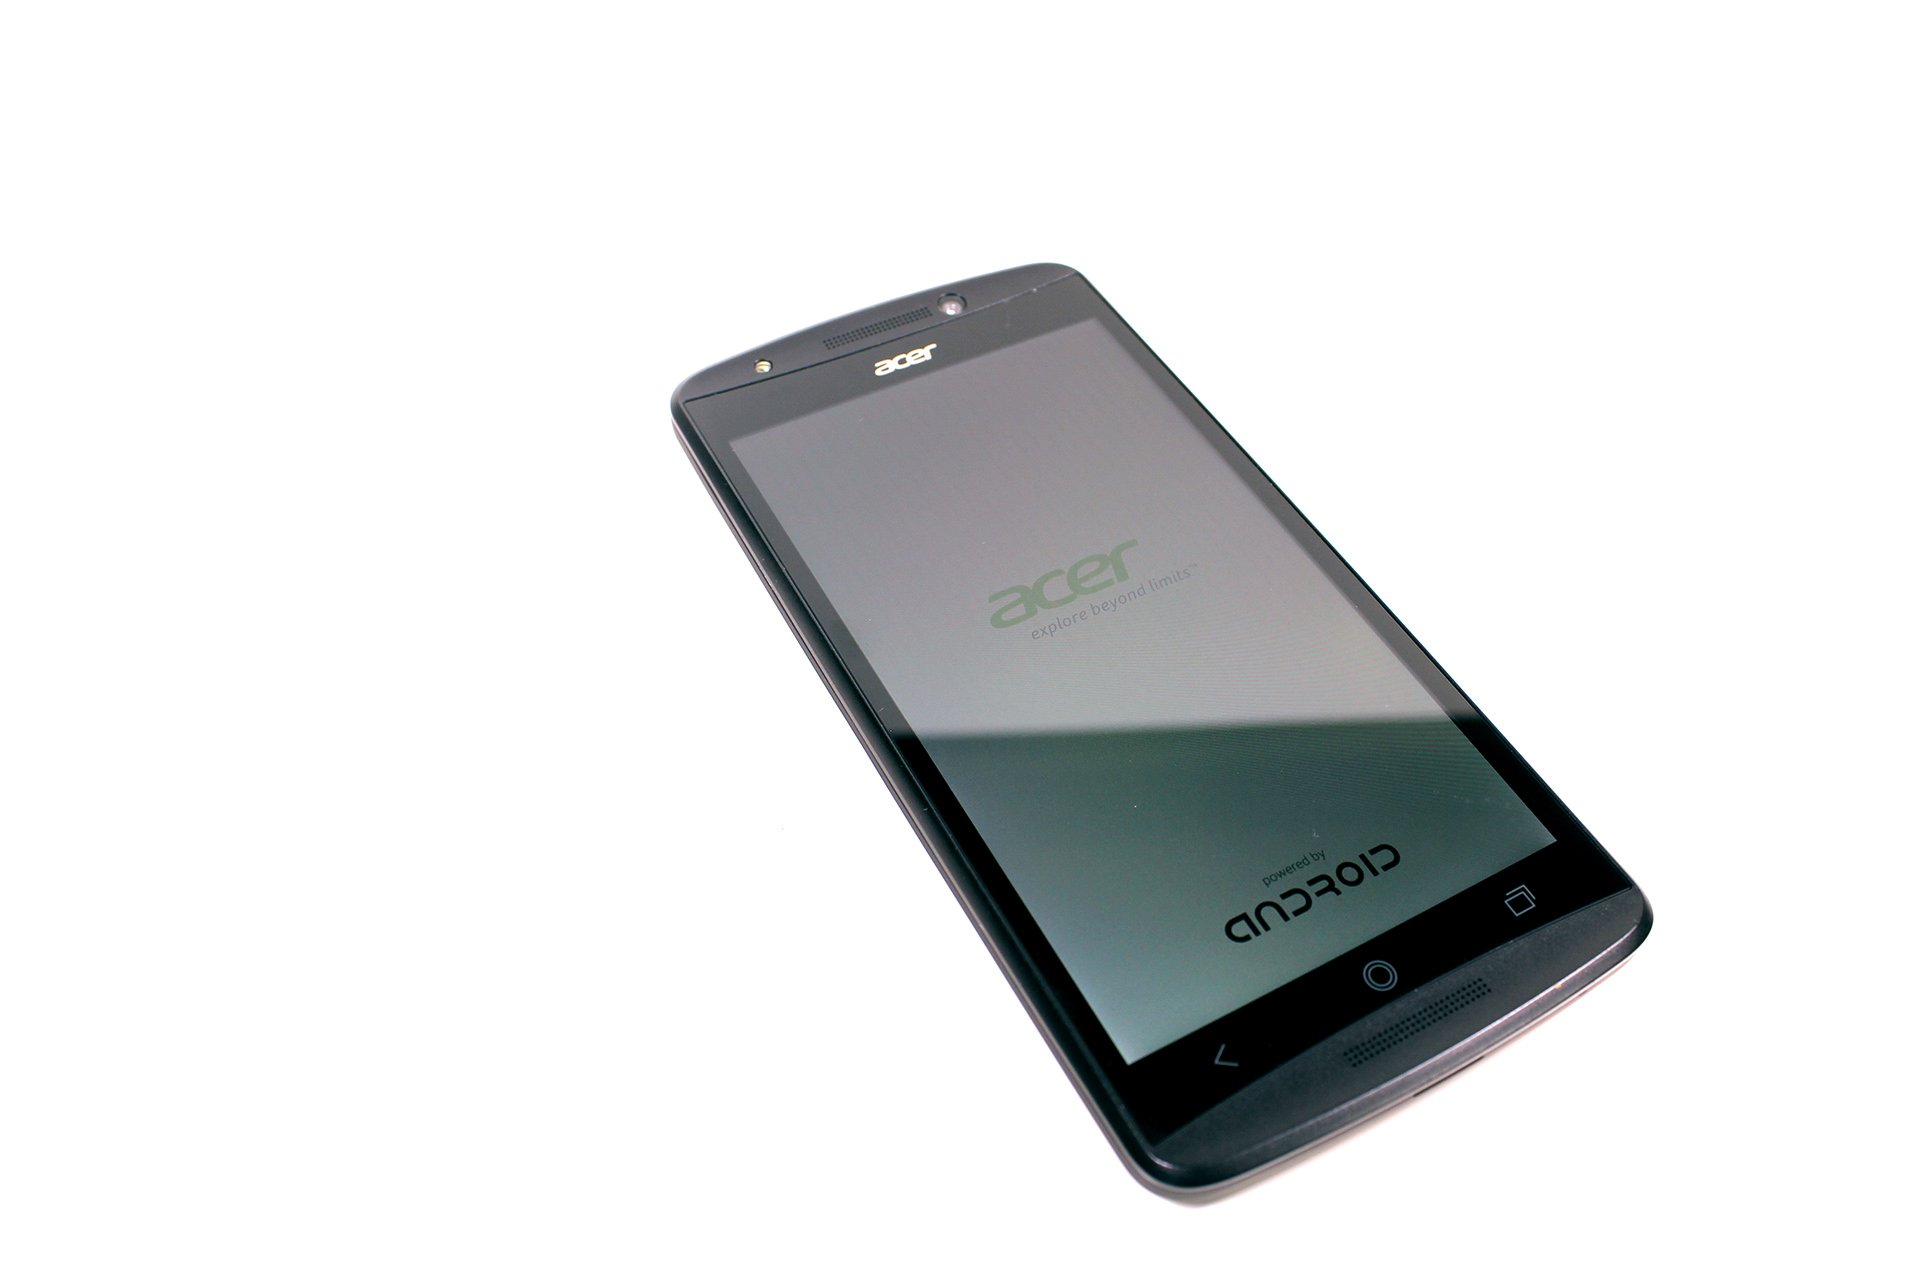 Acer Liquid E700 - Display eingeschaltet